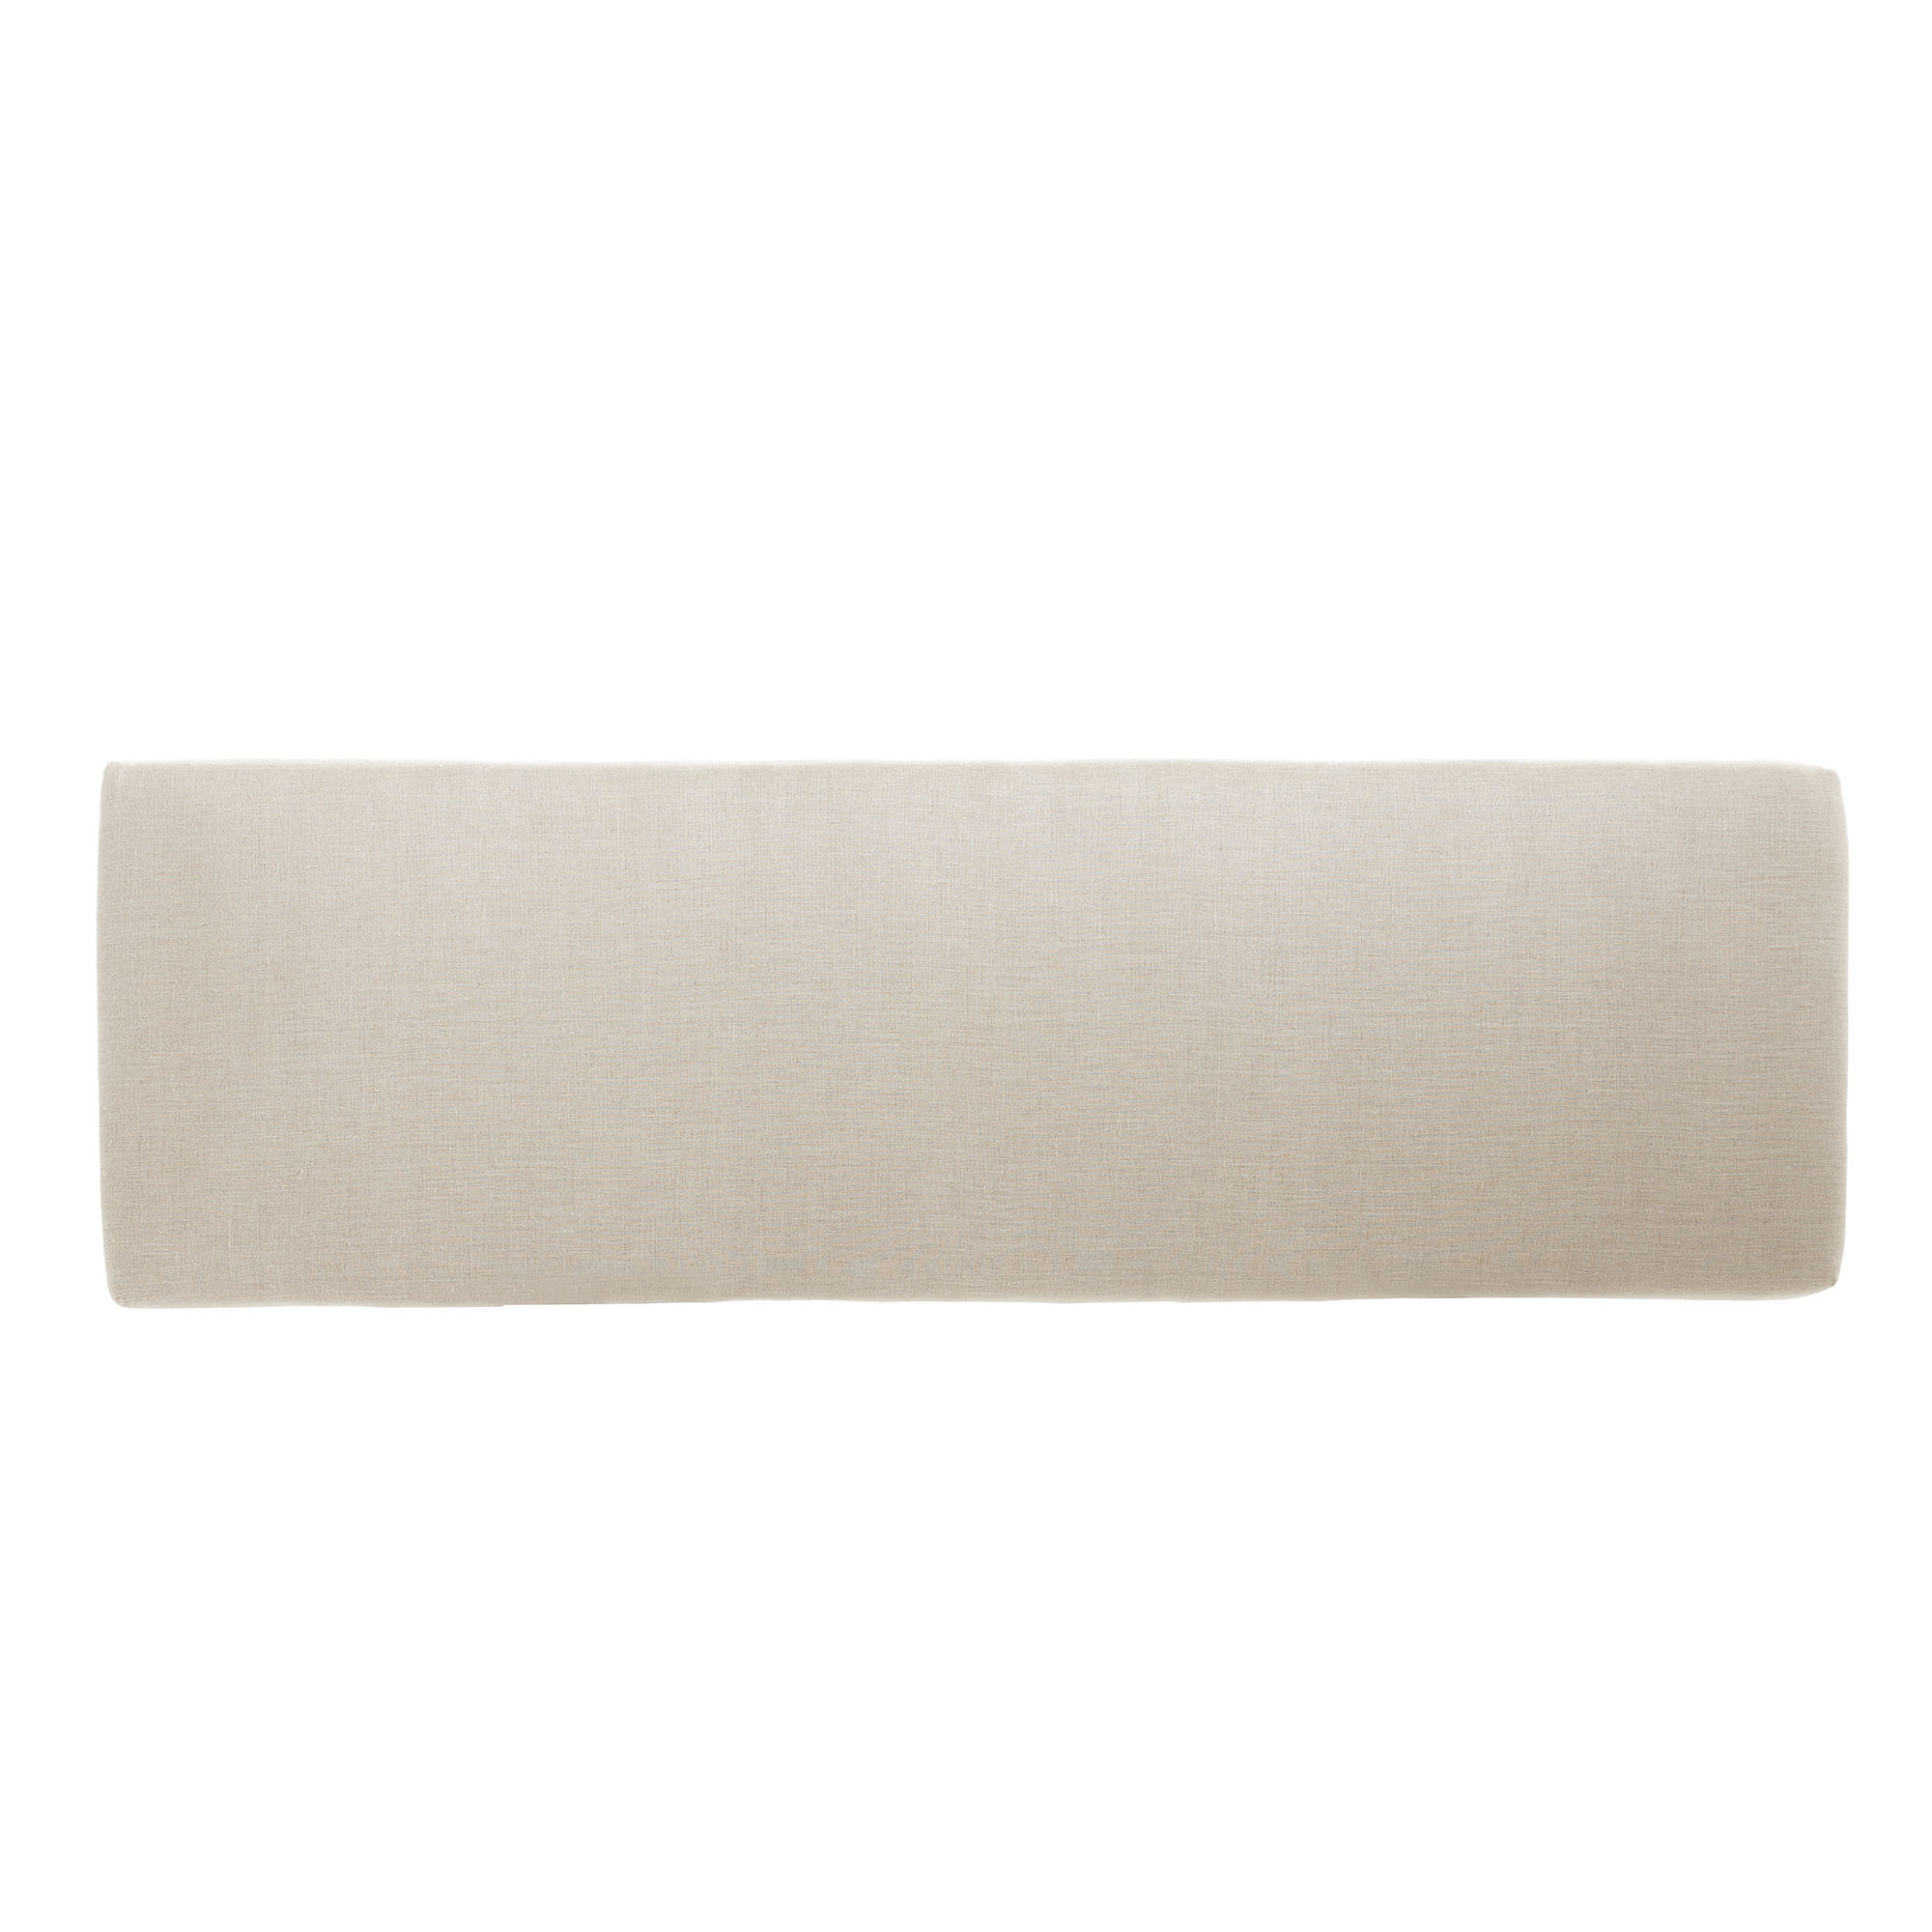 2085 - Bahati Bench - Natural Linen